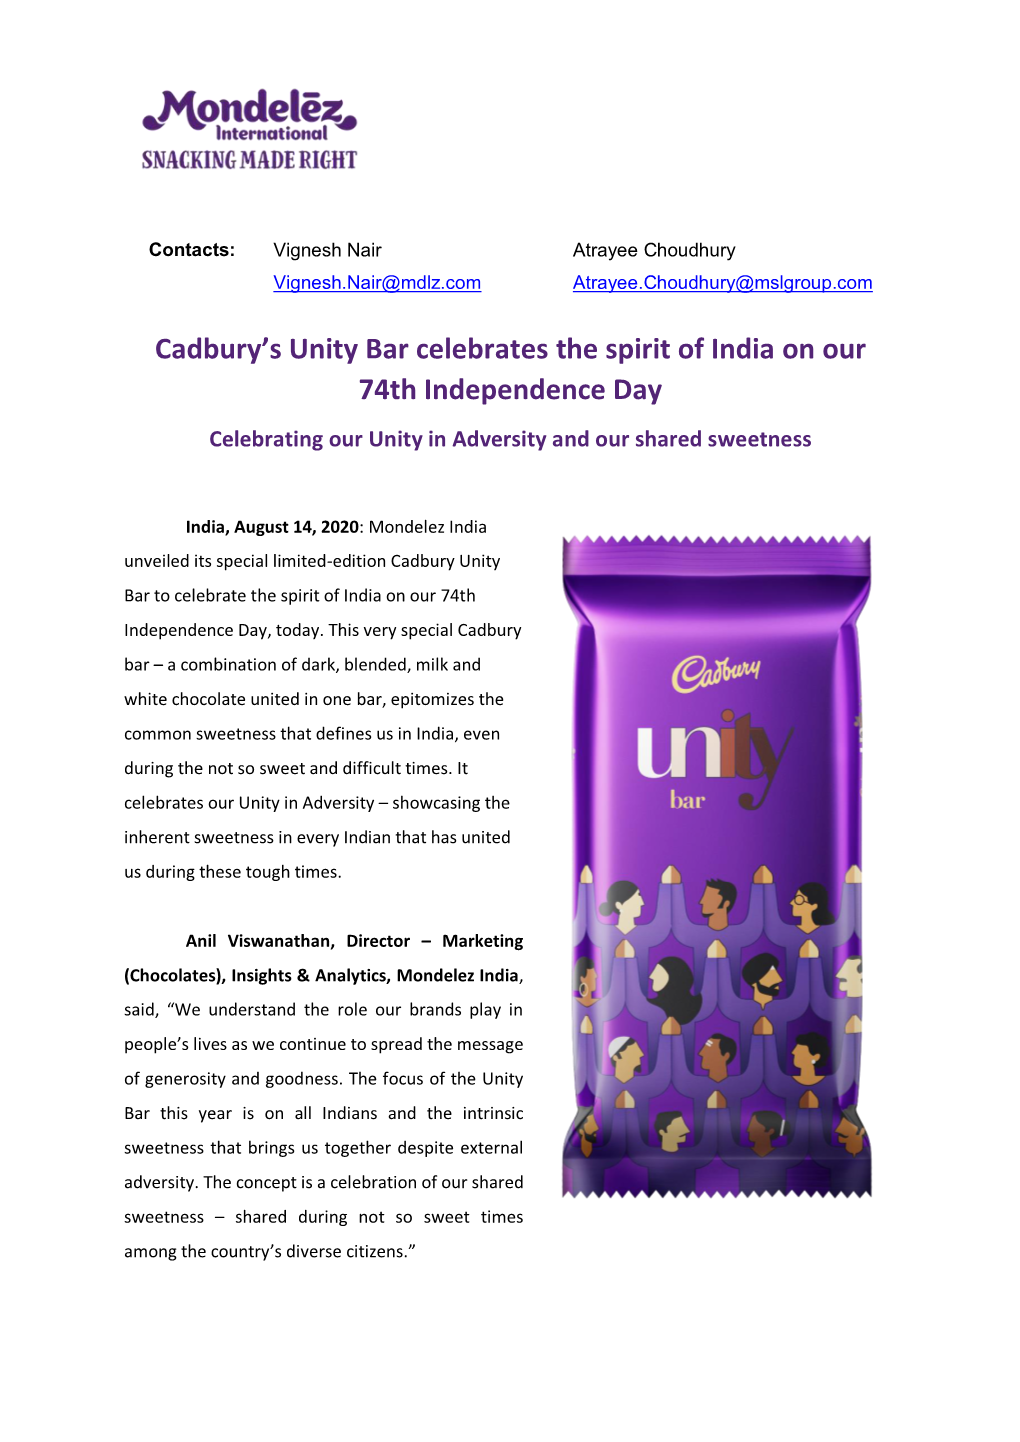 Cadbury's Unity Bar Celebrates the Spirit of India on Our 74Th